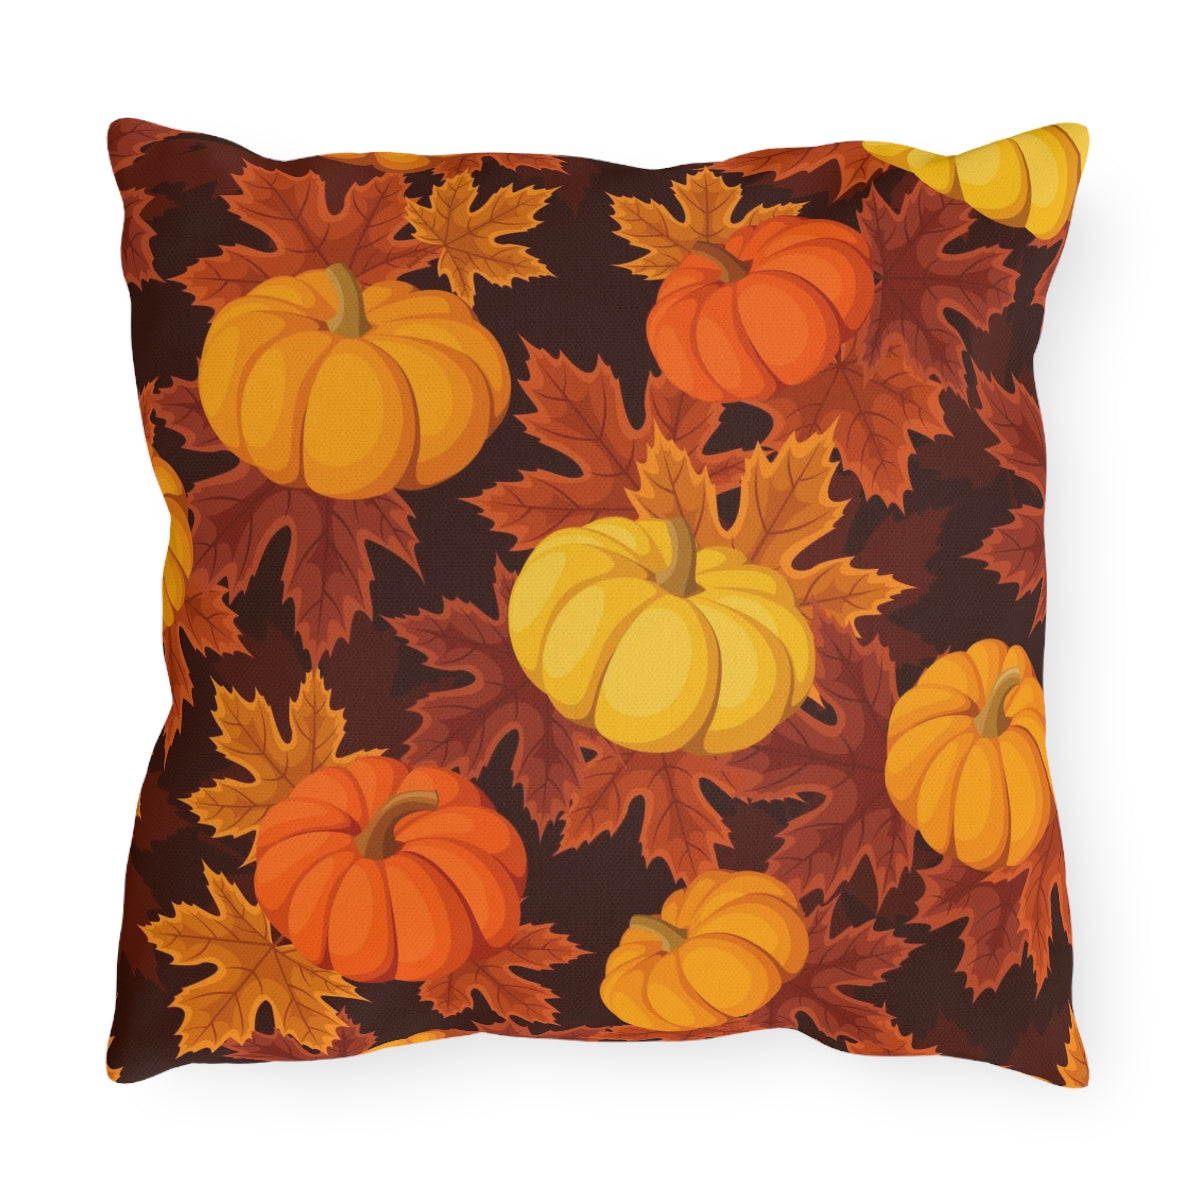 Fall Autumn Outdoor Pillow Filled with Insert, Pumpkins Thanksgiving Leafs Decor Square Throw Decorative Farmhouse Patio Porch Cushion Starcove Fashion